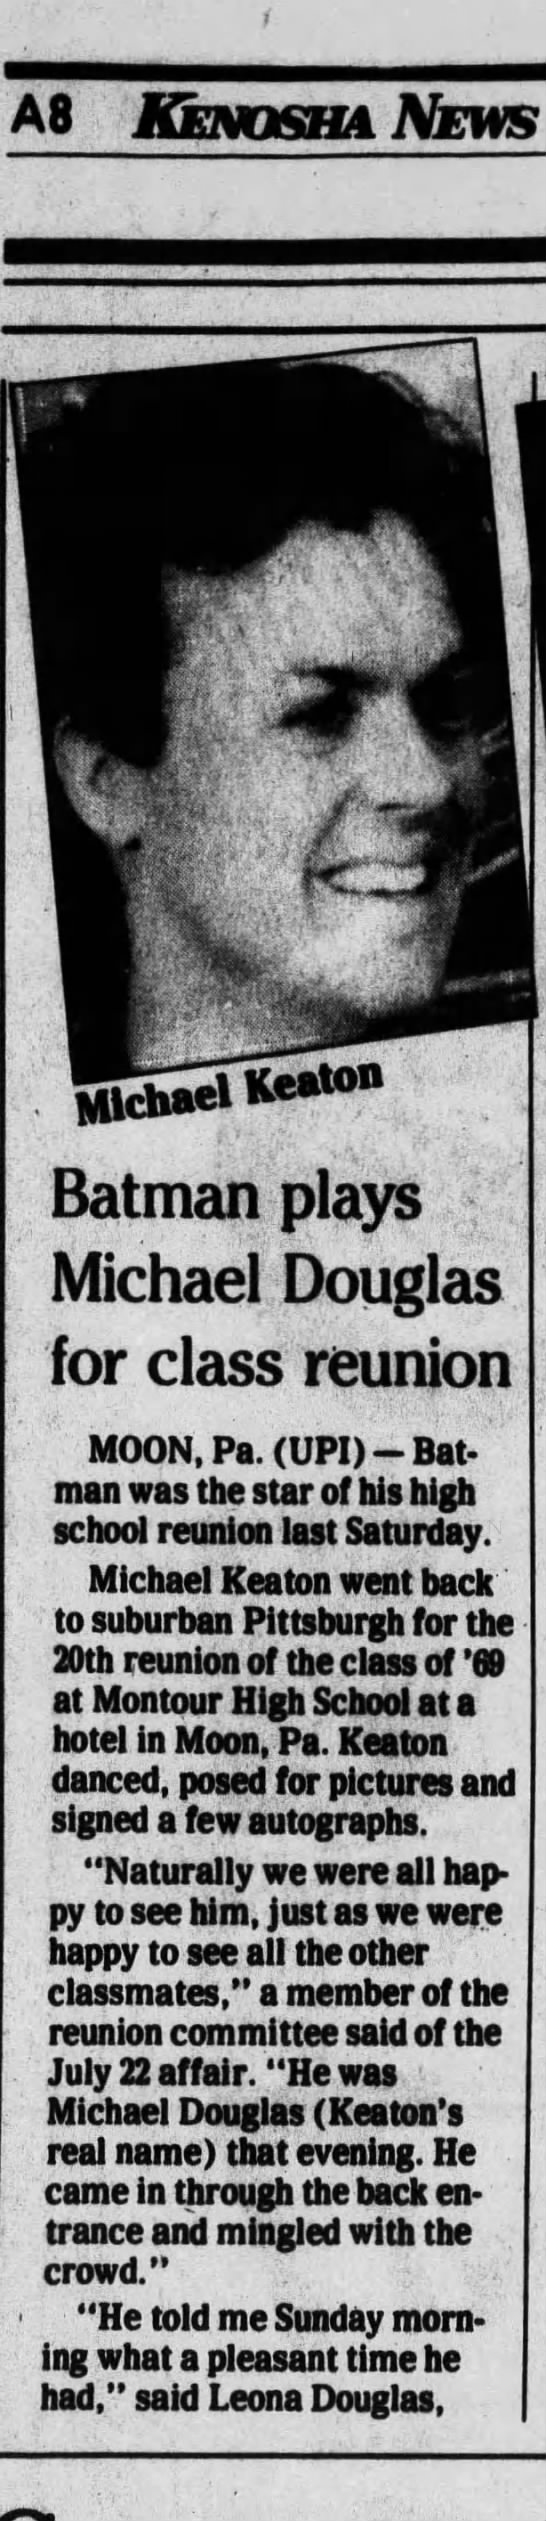 Michael Douglas / Michael Keaton - 